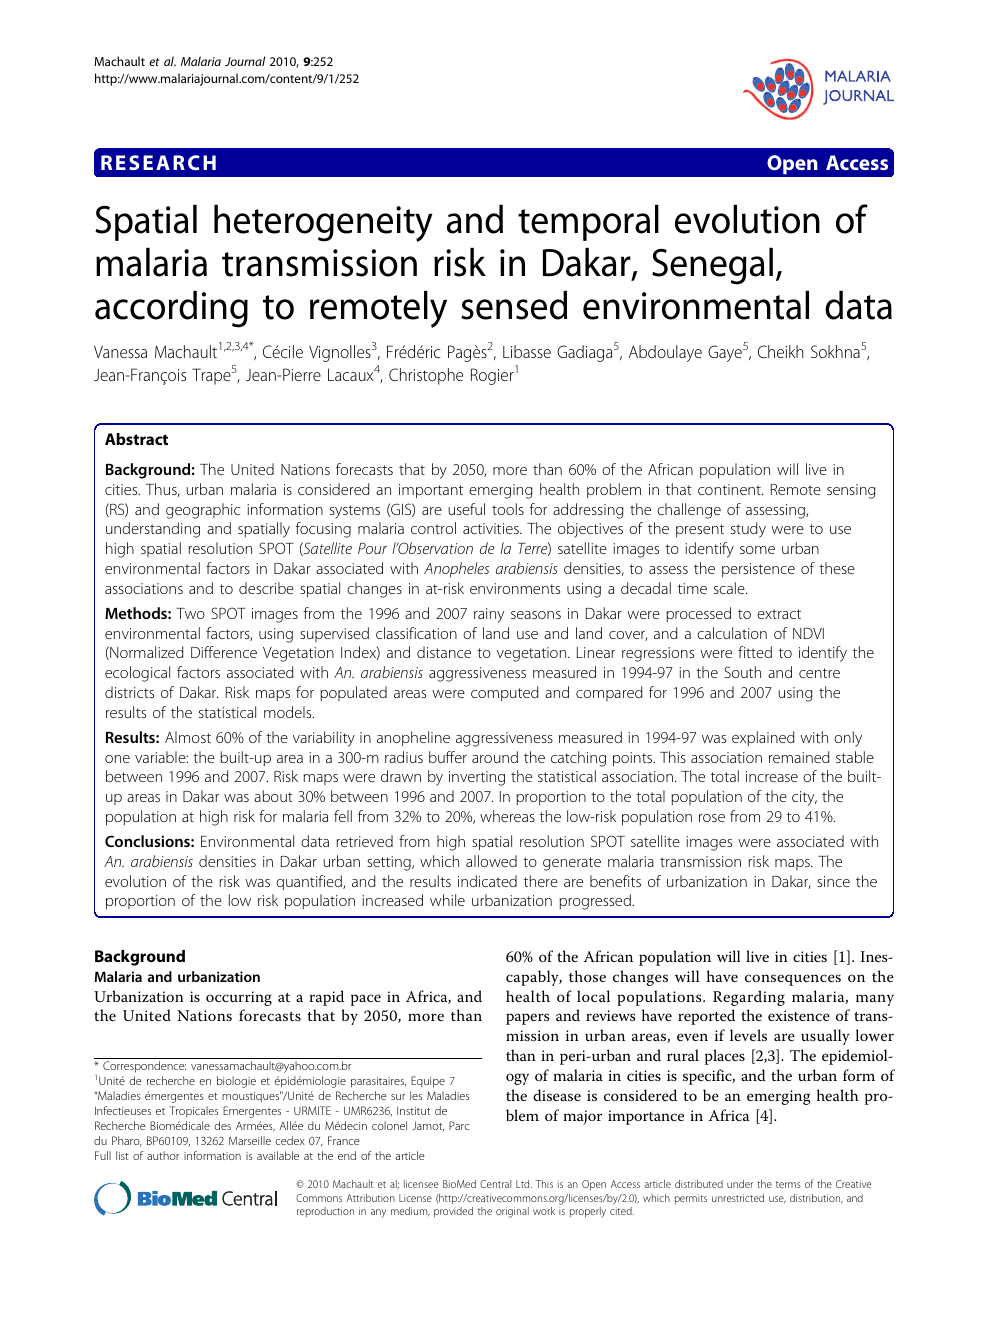 Spatial Heterogeneity And Temporal Evolution Of Malaria